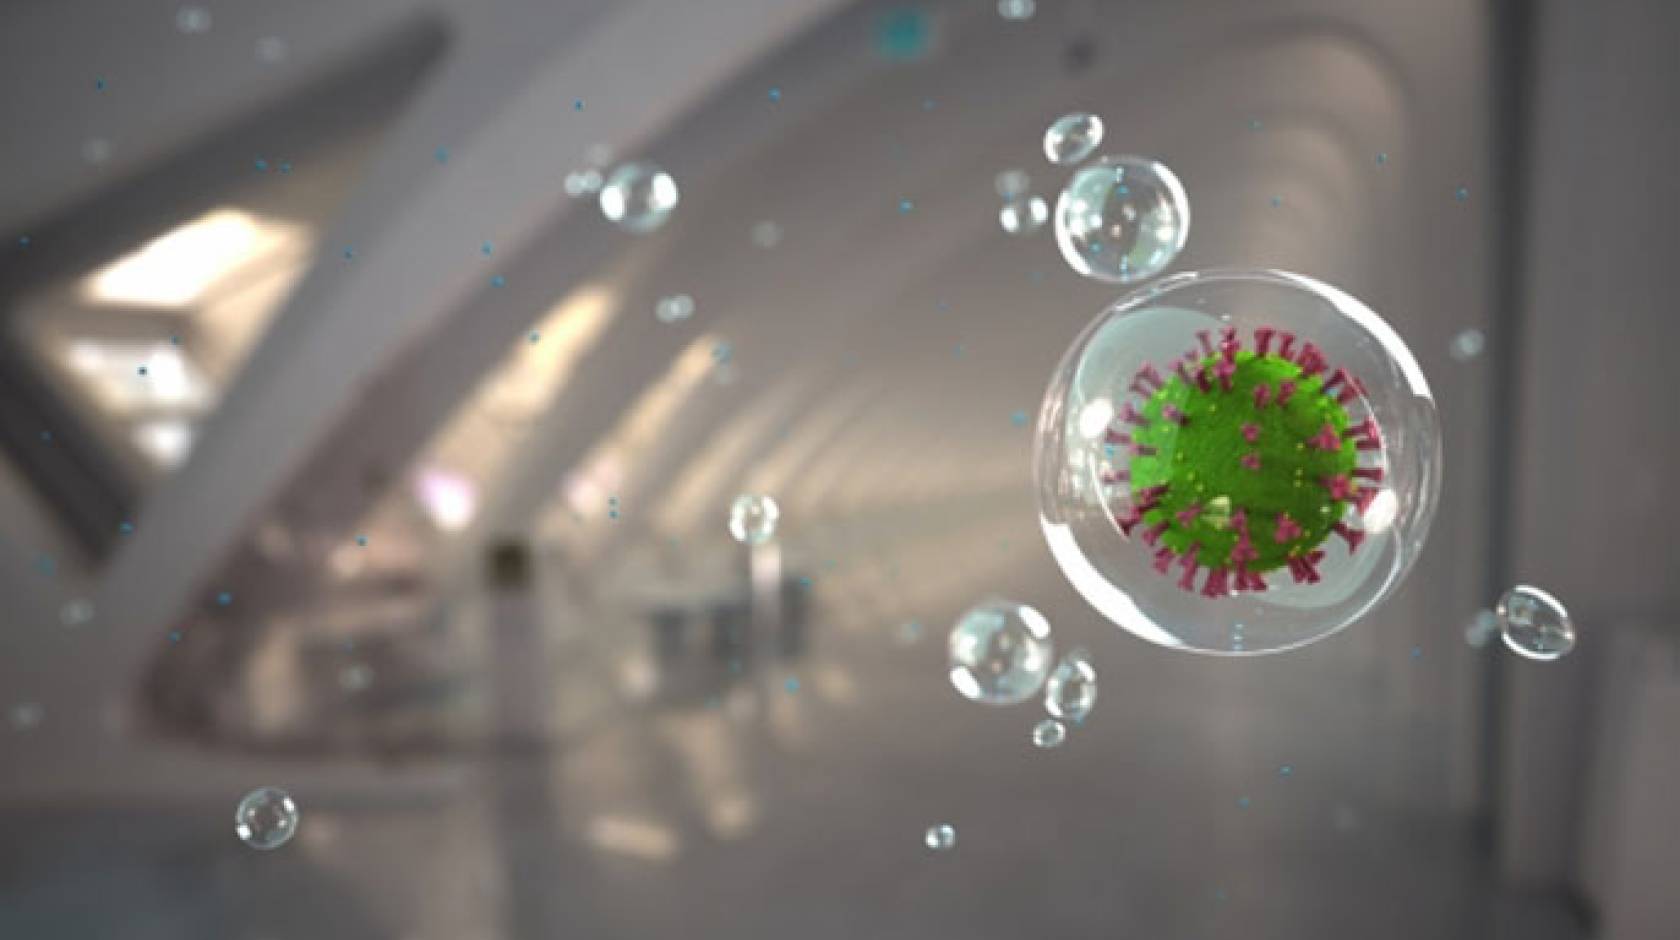 Coronavirus in a droplet illustration